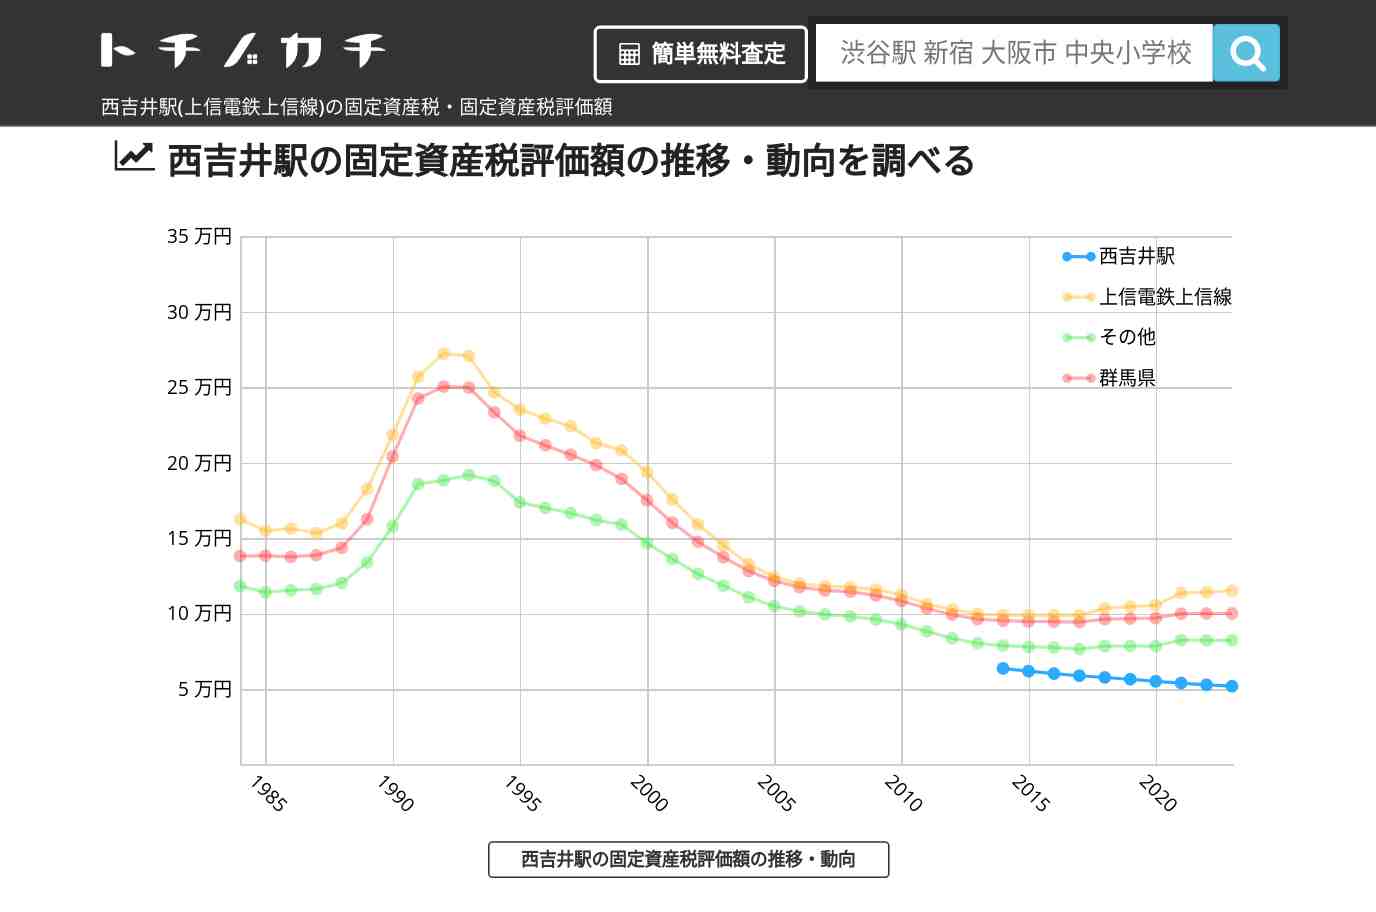 西吉井駅(上信電鉄上信線)の固定資産税・固定資産税評価額 | トチノカチ